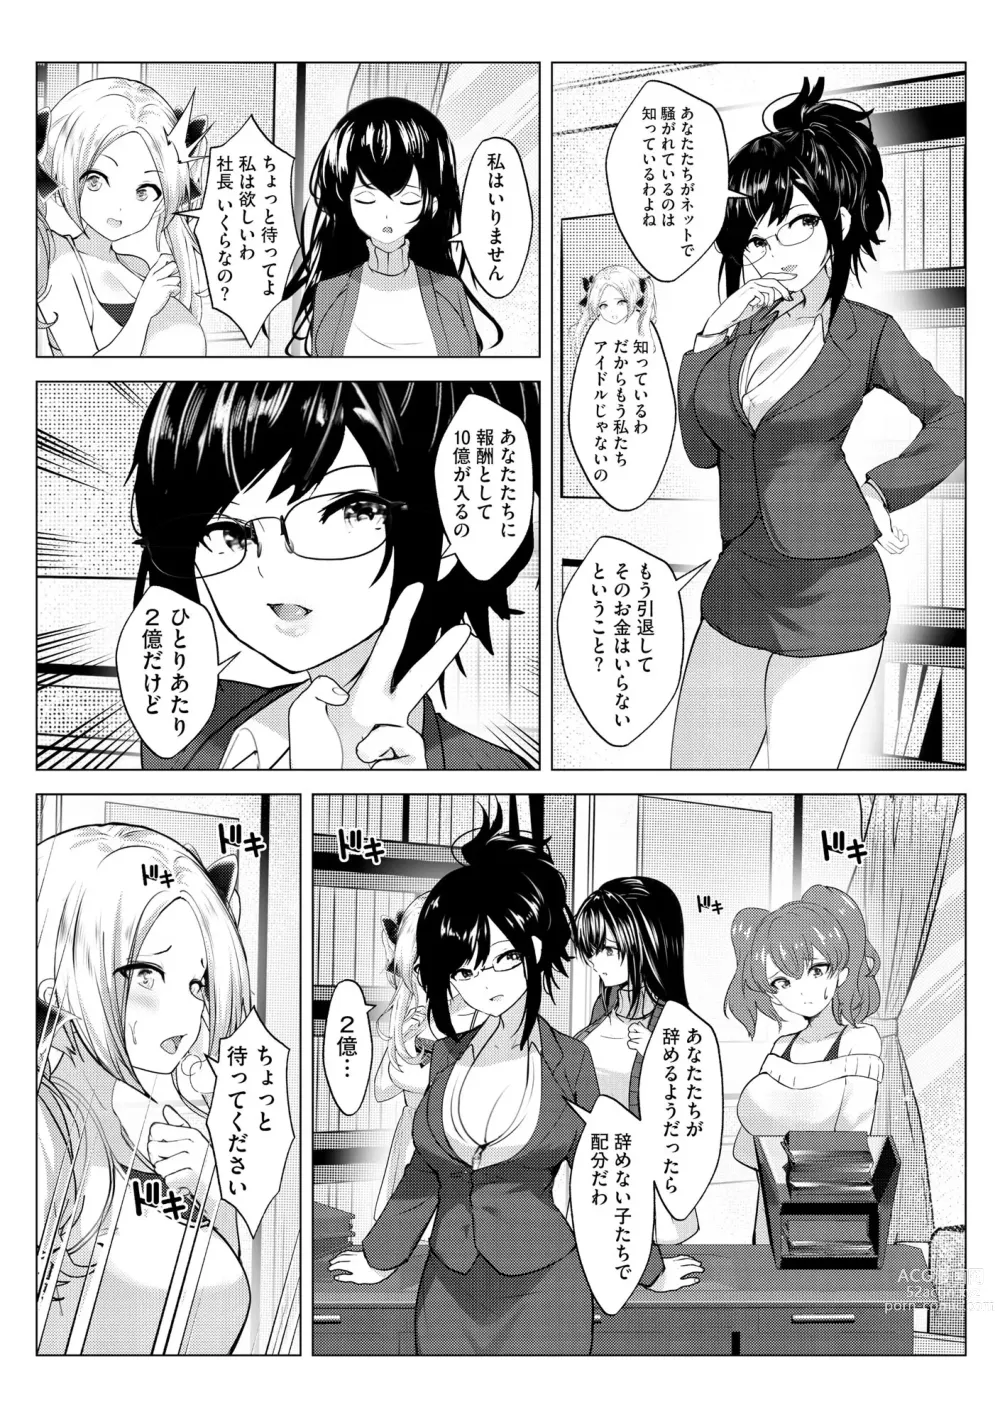 Page 380 of manga Cyberia Plus Vol. 16